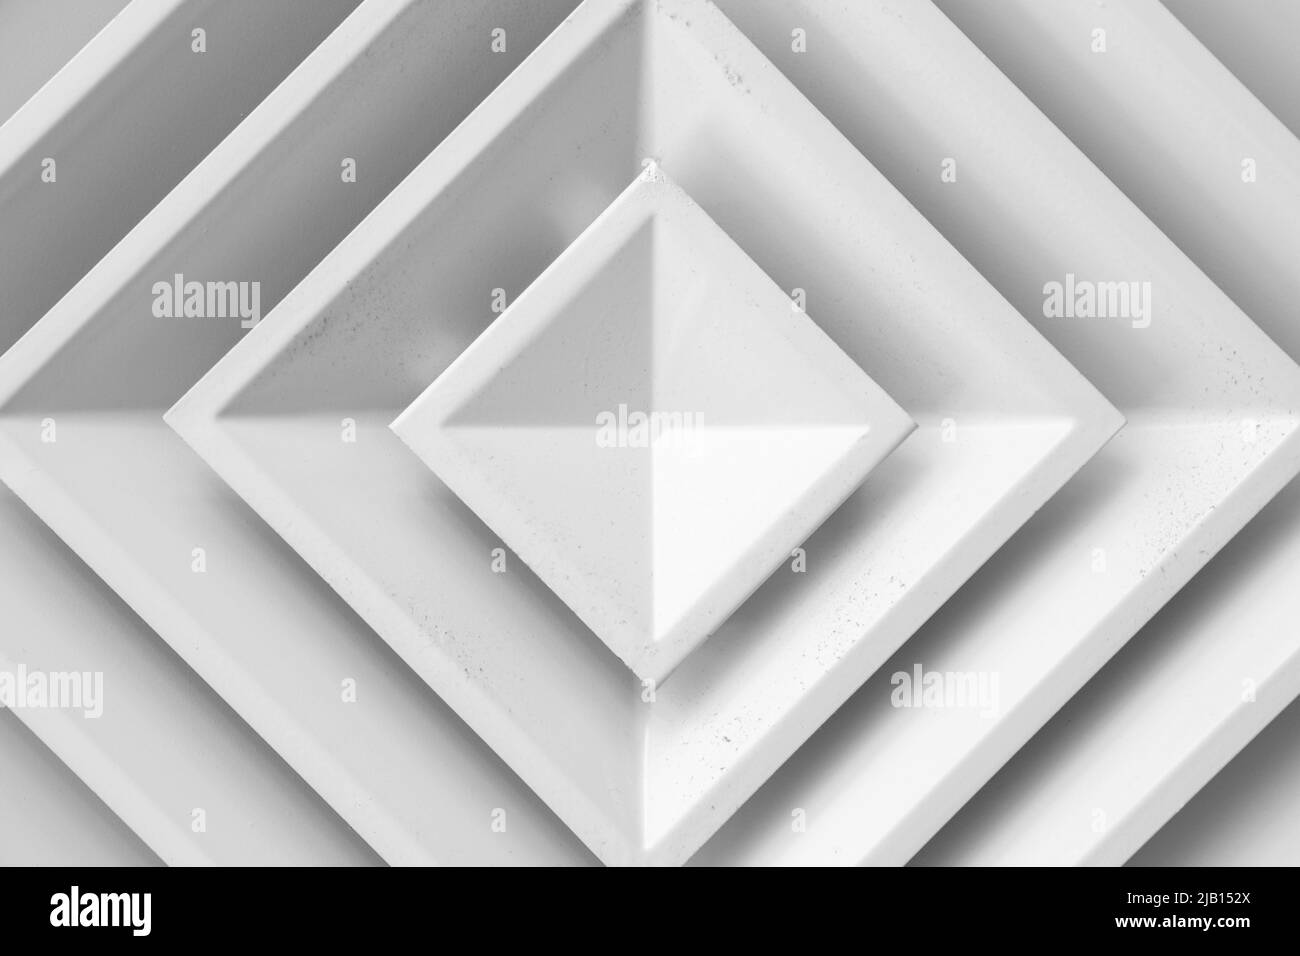 Square white ceiling ventilation diffuser close up photo Stock Photo